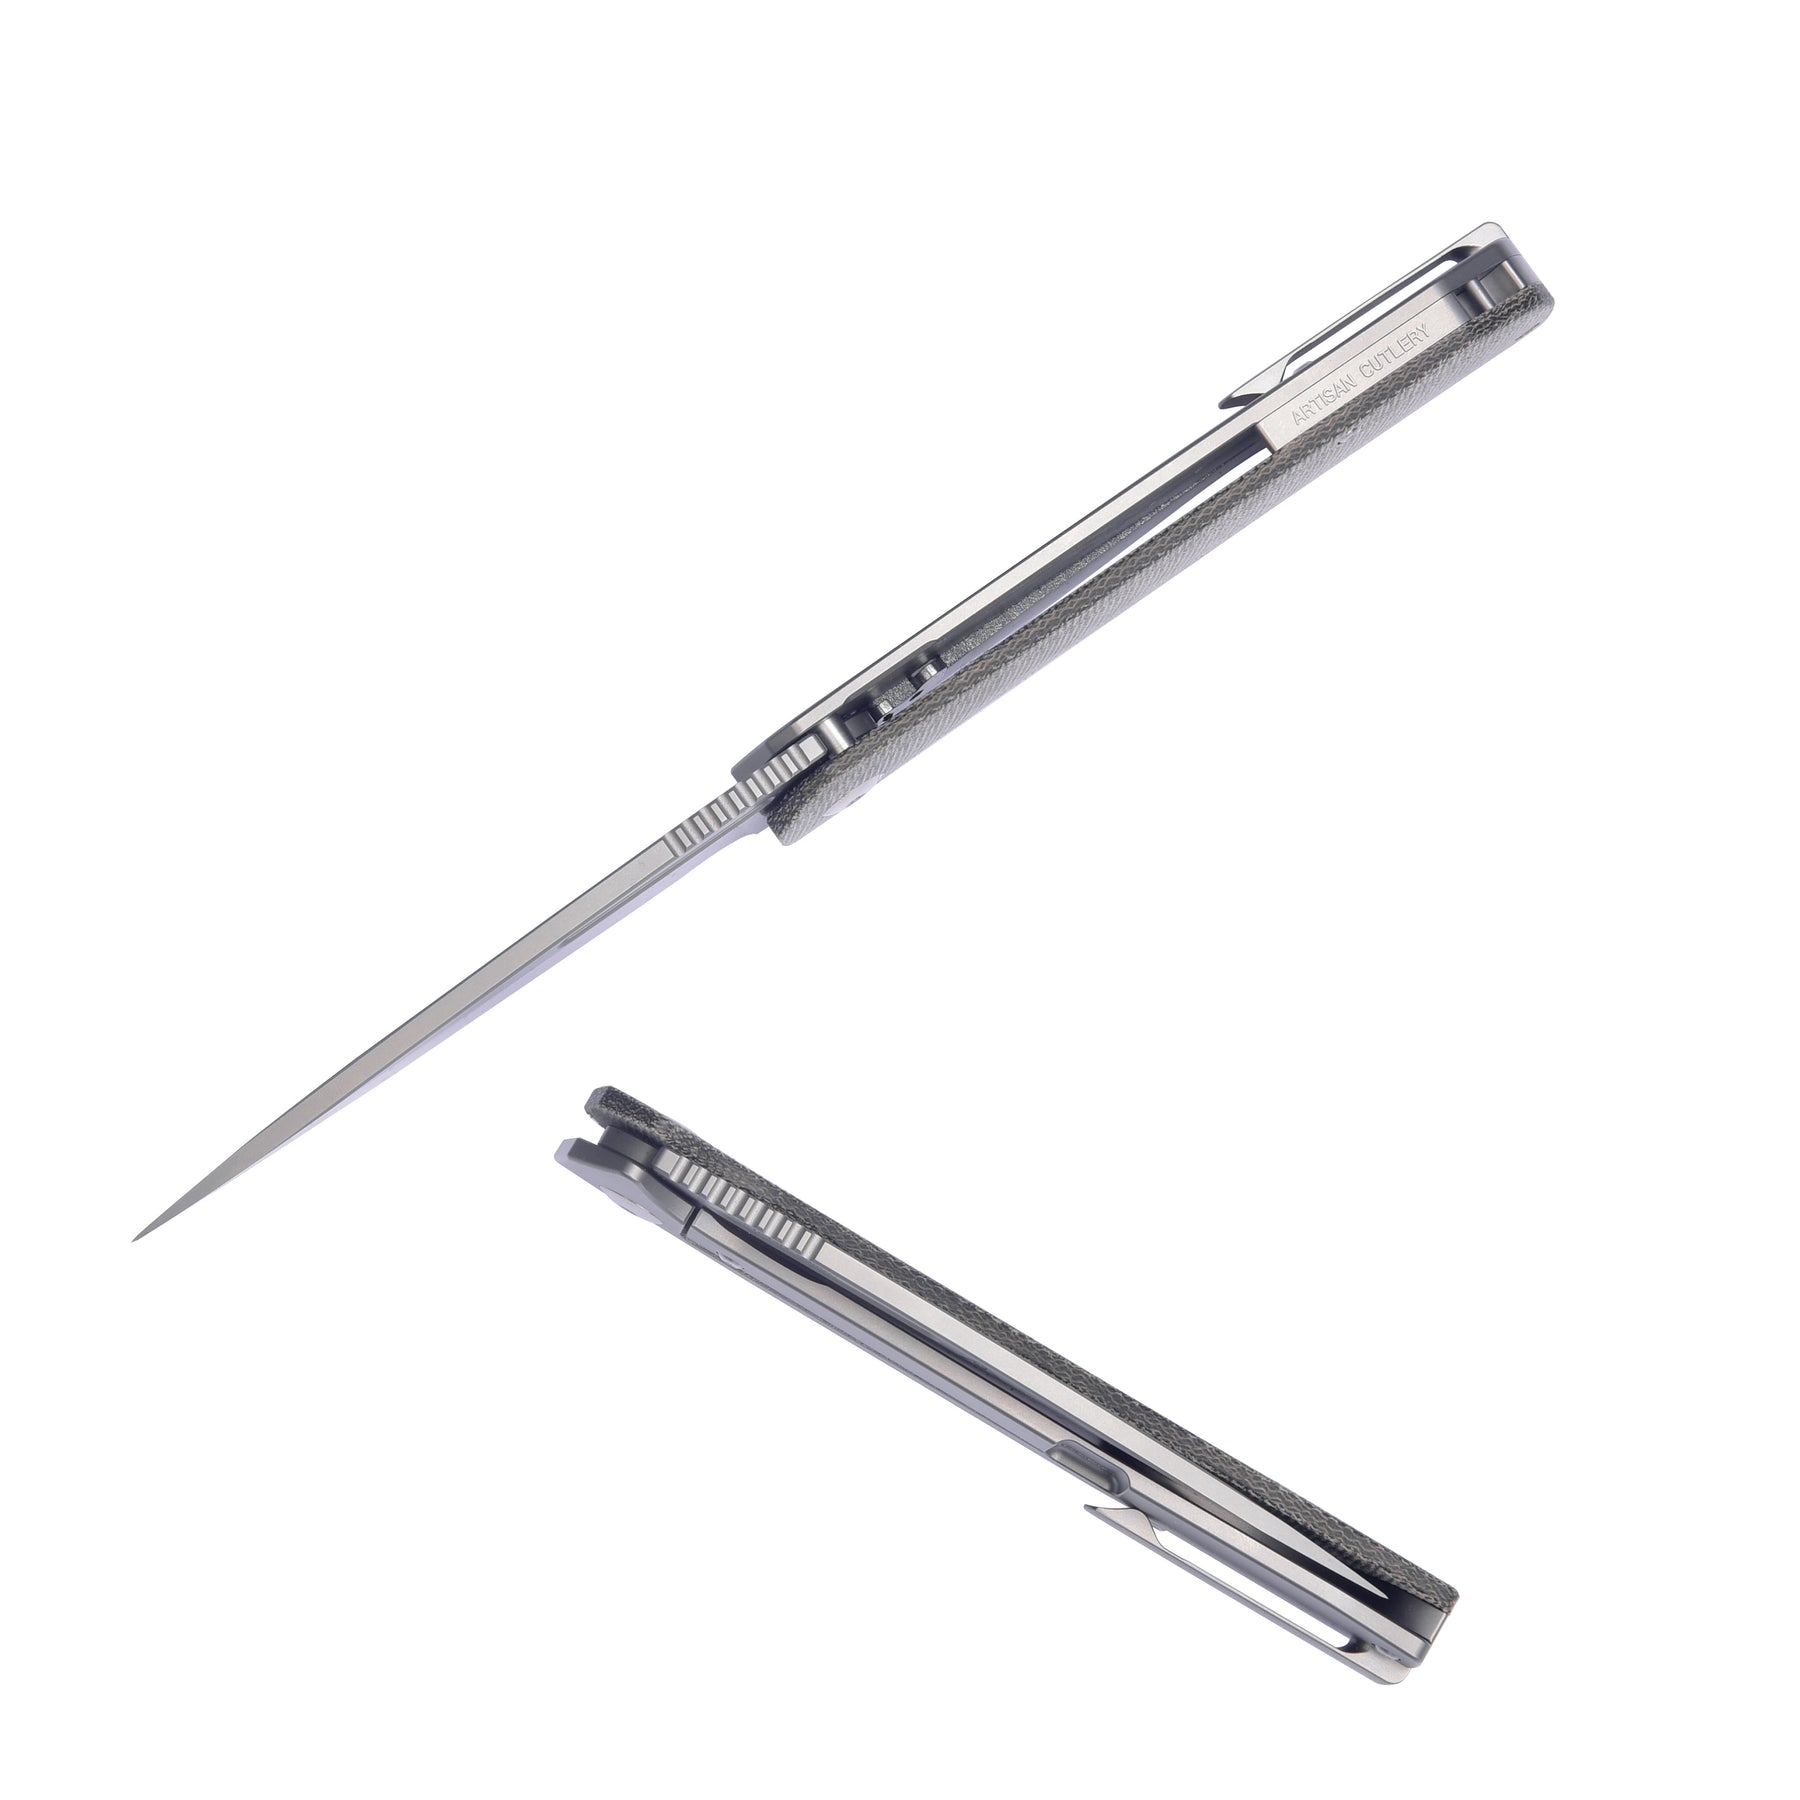 Artisan Cutlery Arion ATZ-1843G S35VN Blade ODG Micarta and Titanium Handle Folding Knives